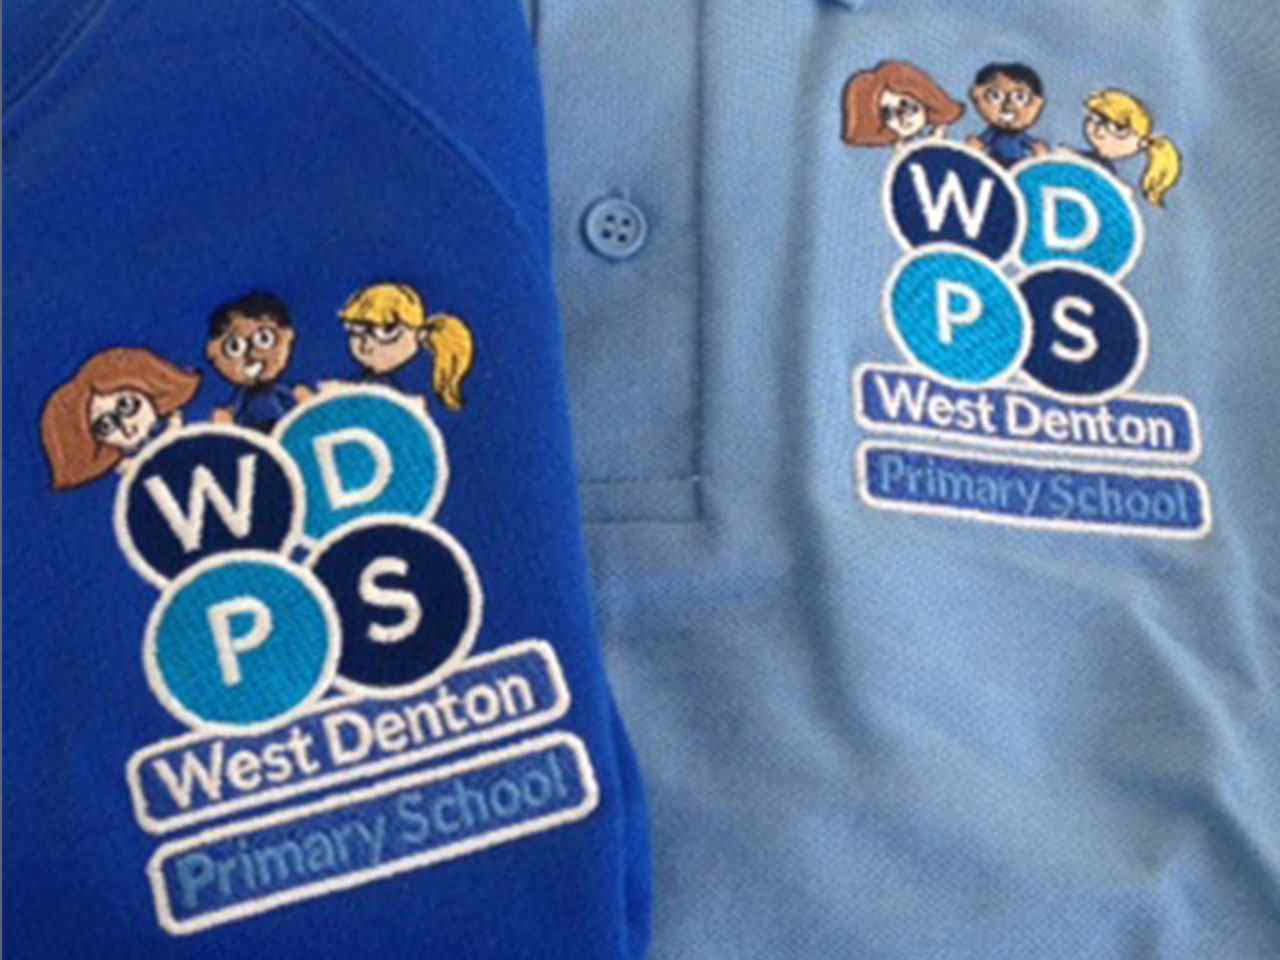 WDPS-logo-on-uniform copy